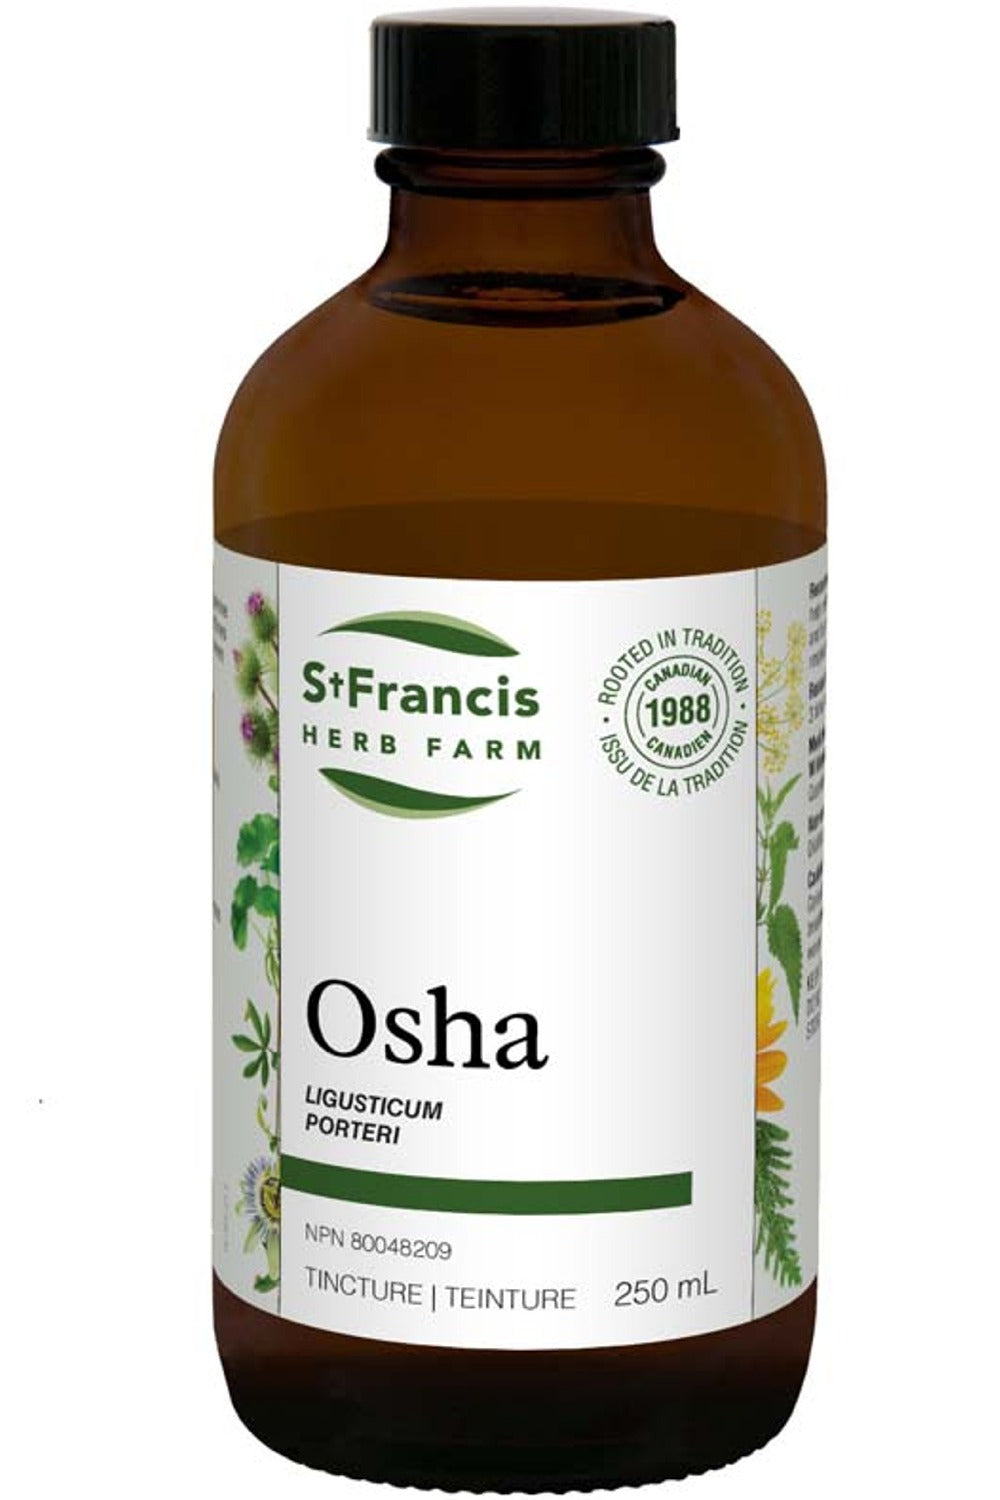 ST FRANCIS HERB FARM Osha (250 ml)